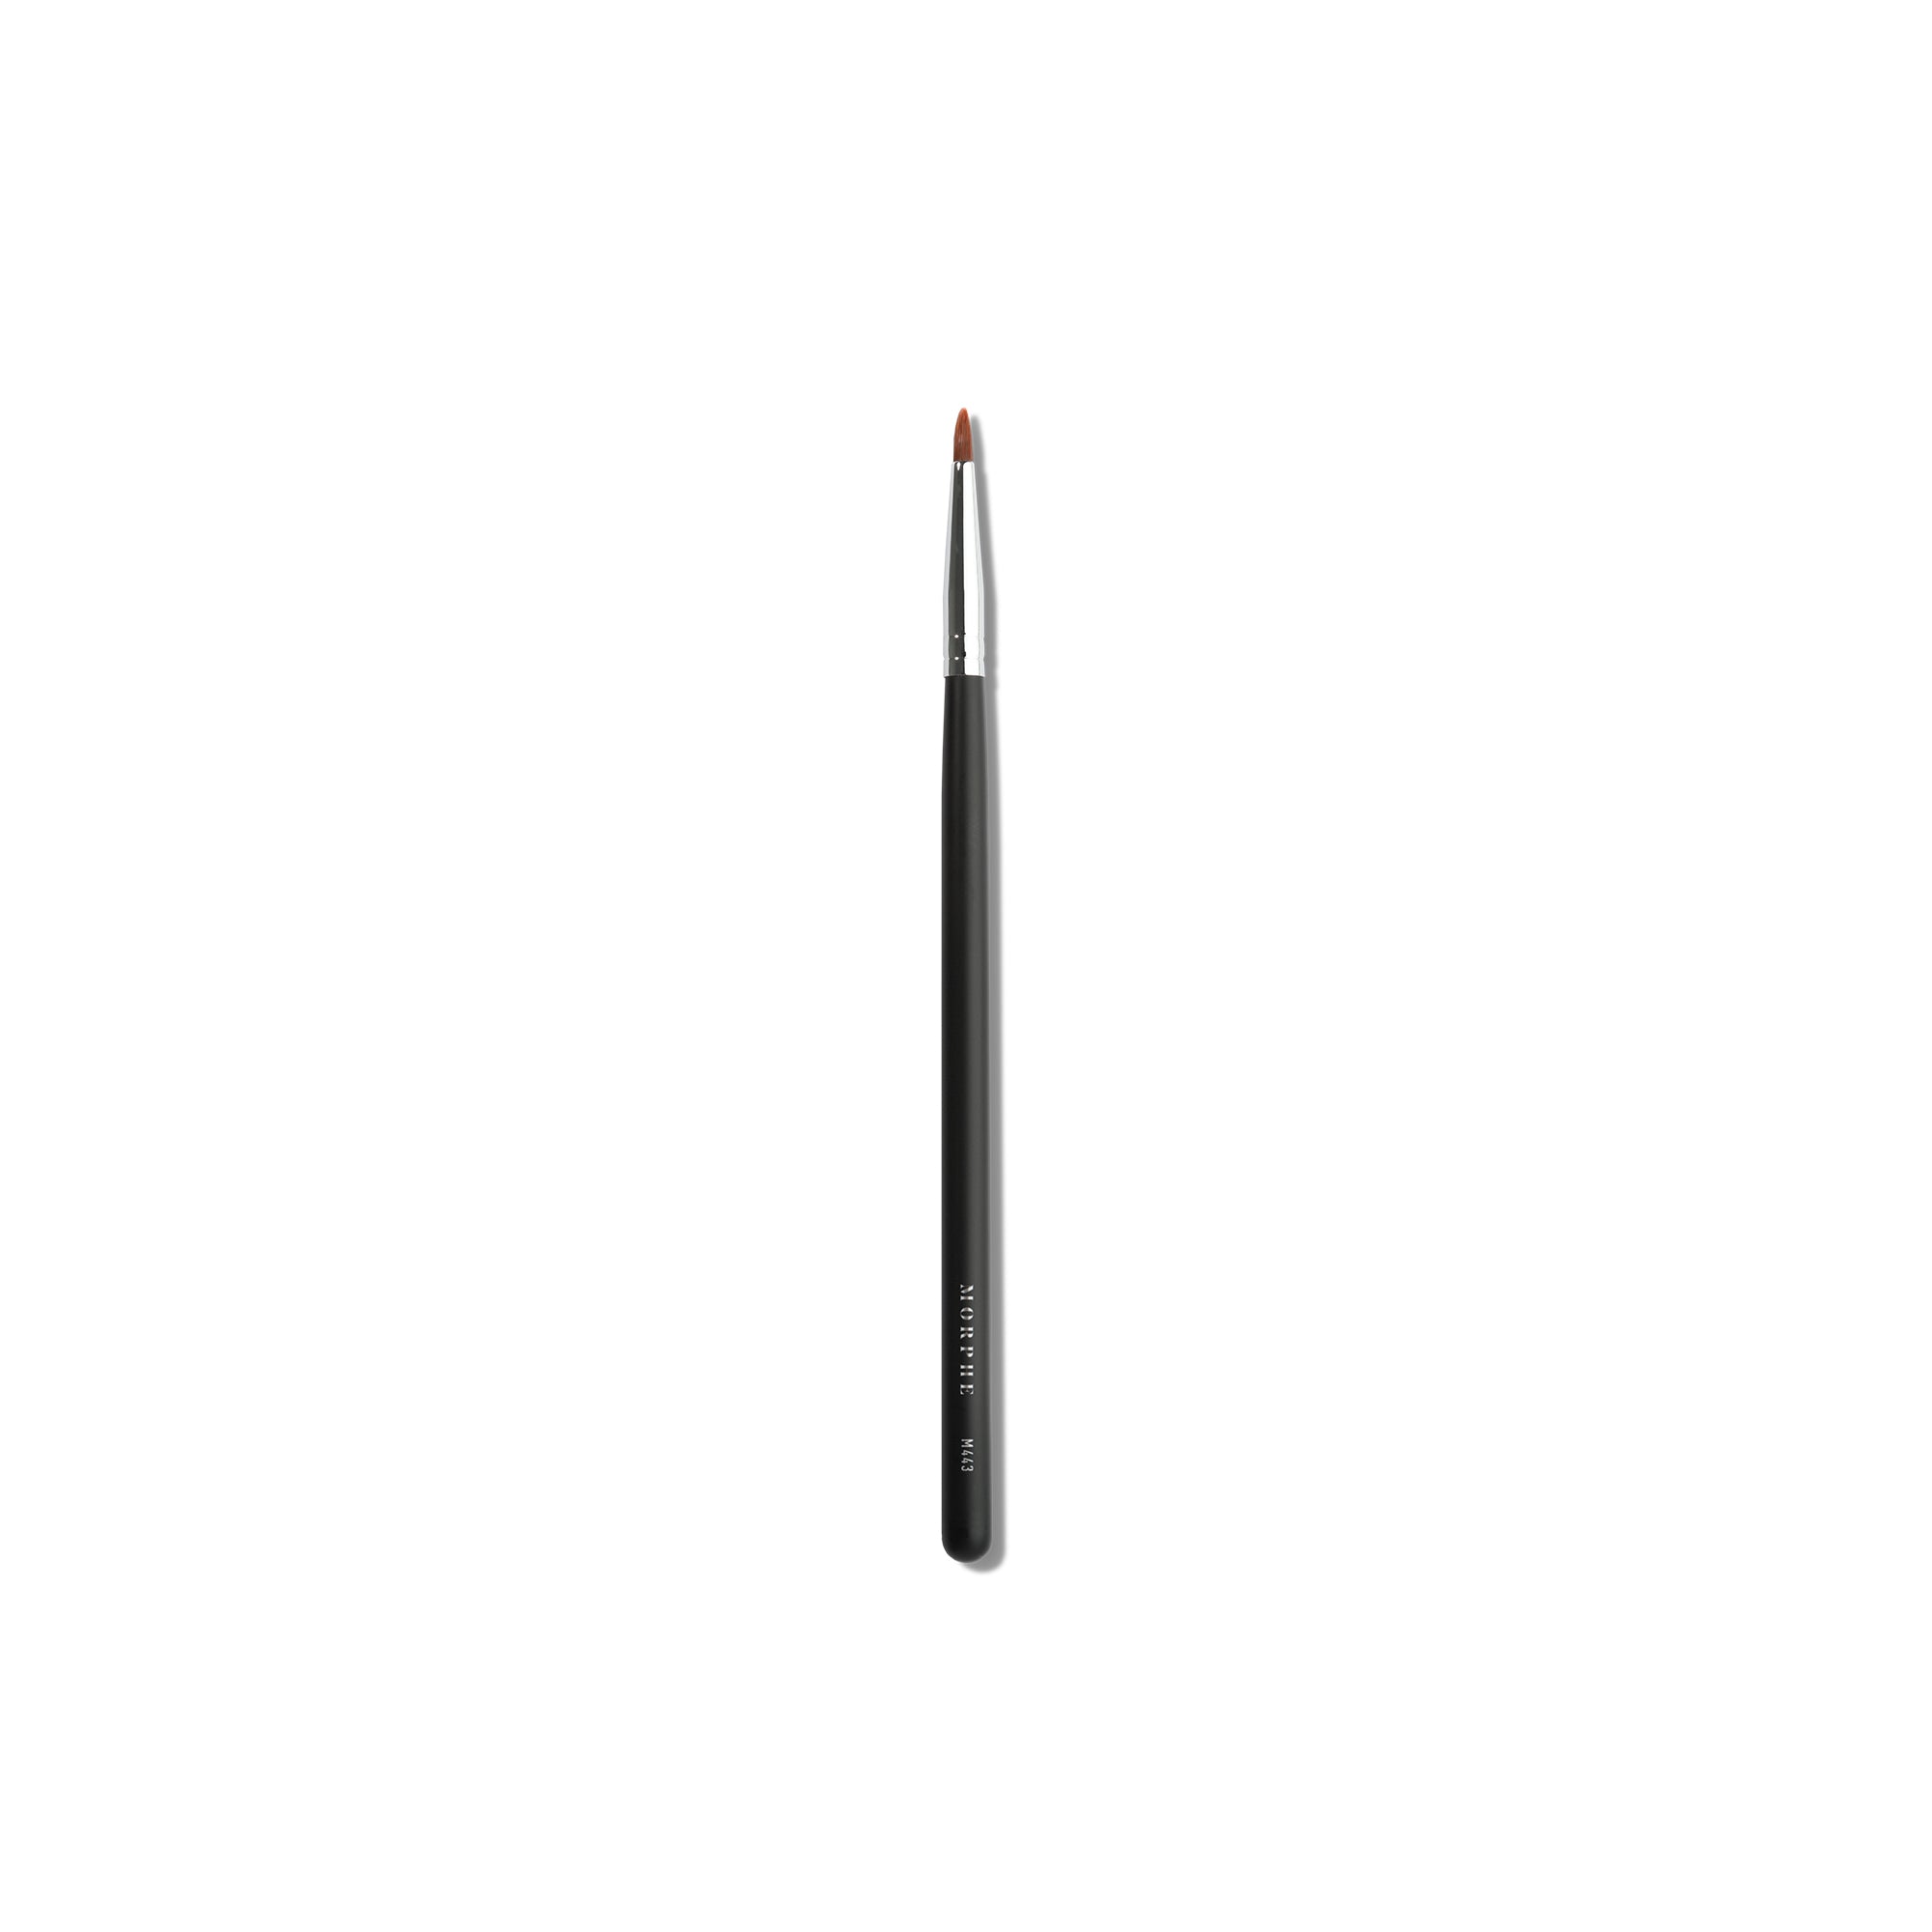 M443 Pointed Liner Eyeliner Brush - Image 1